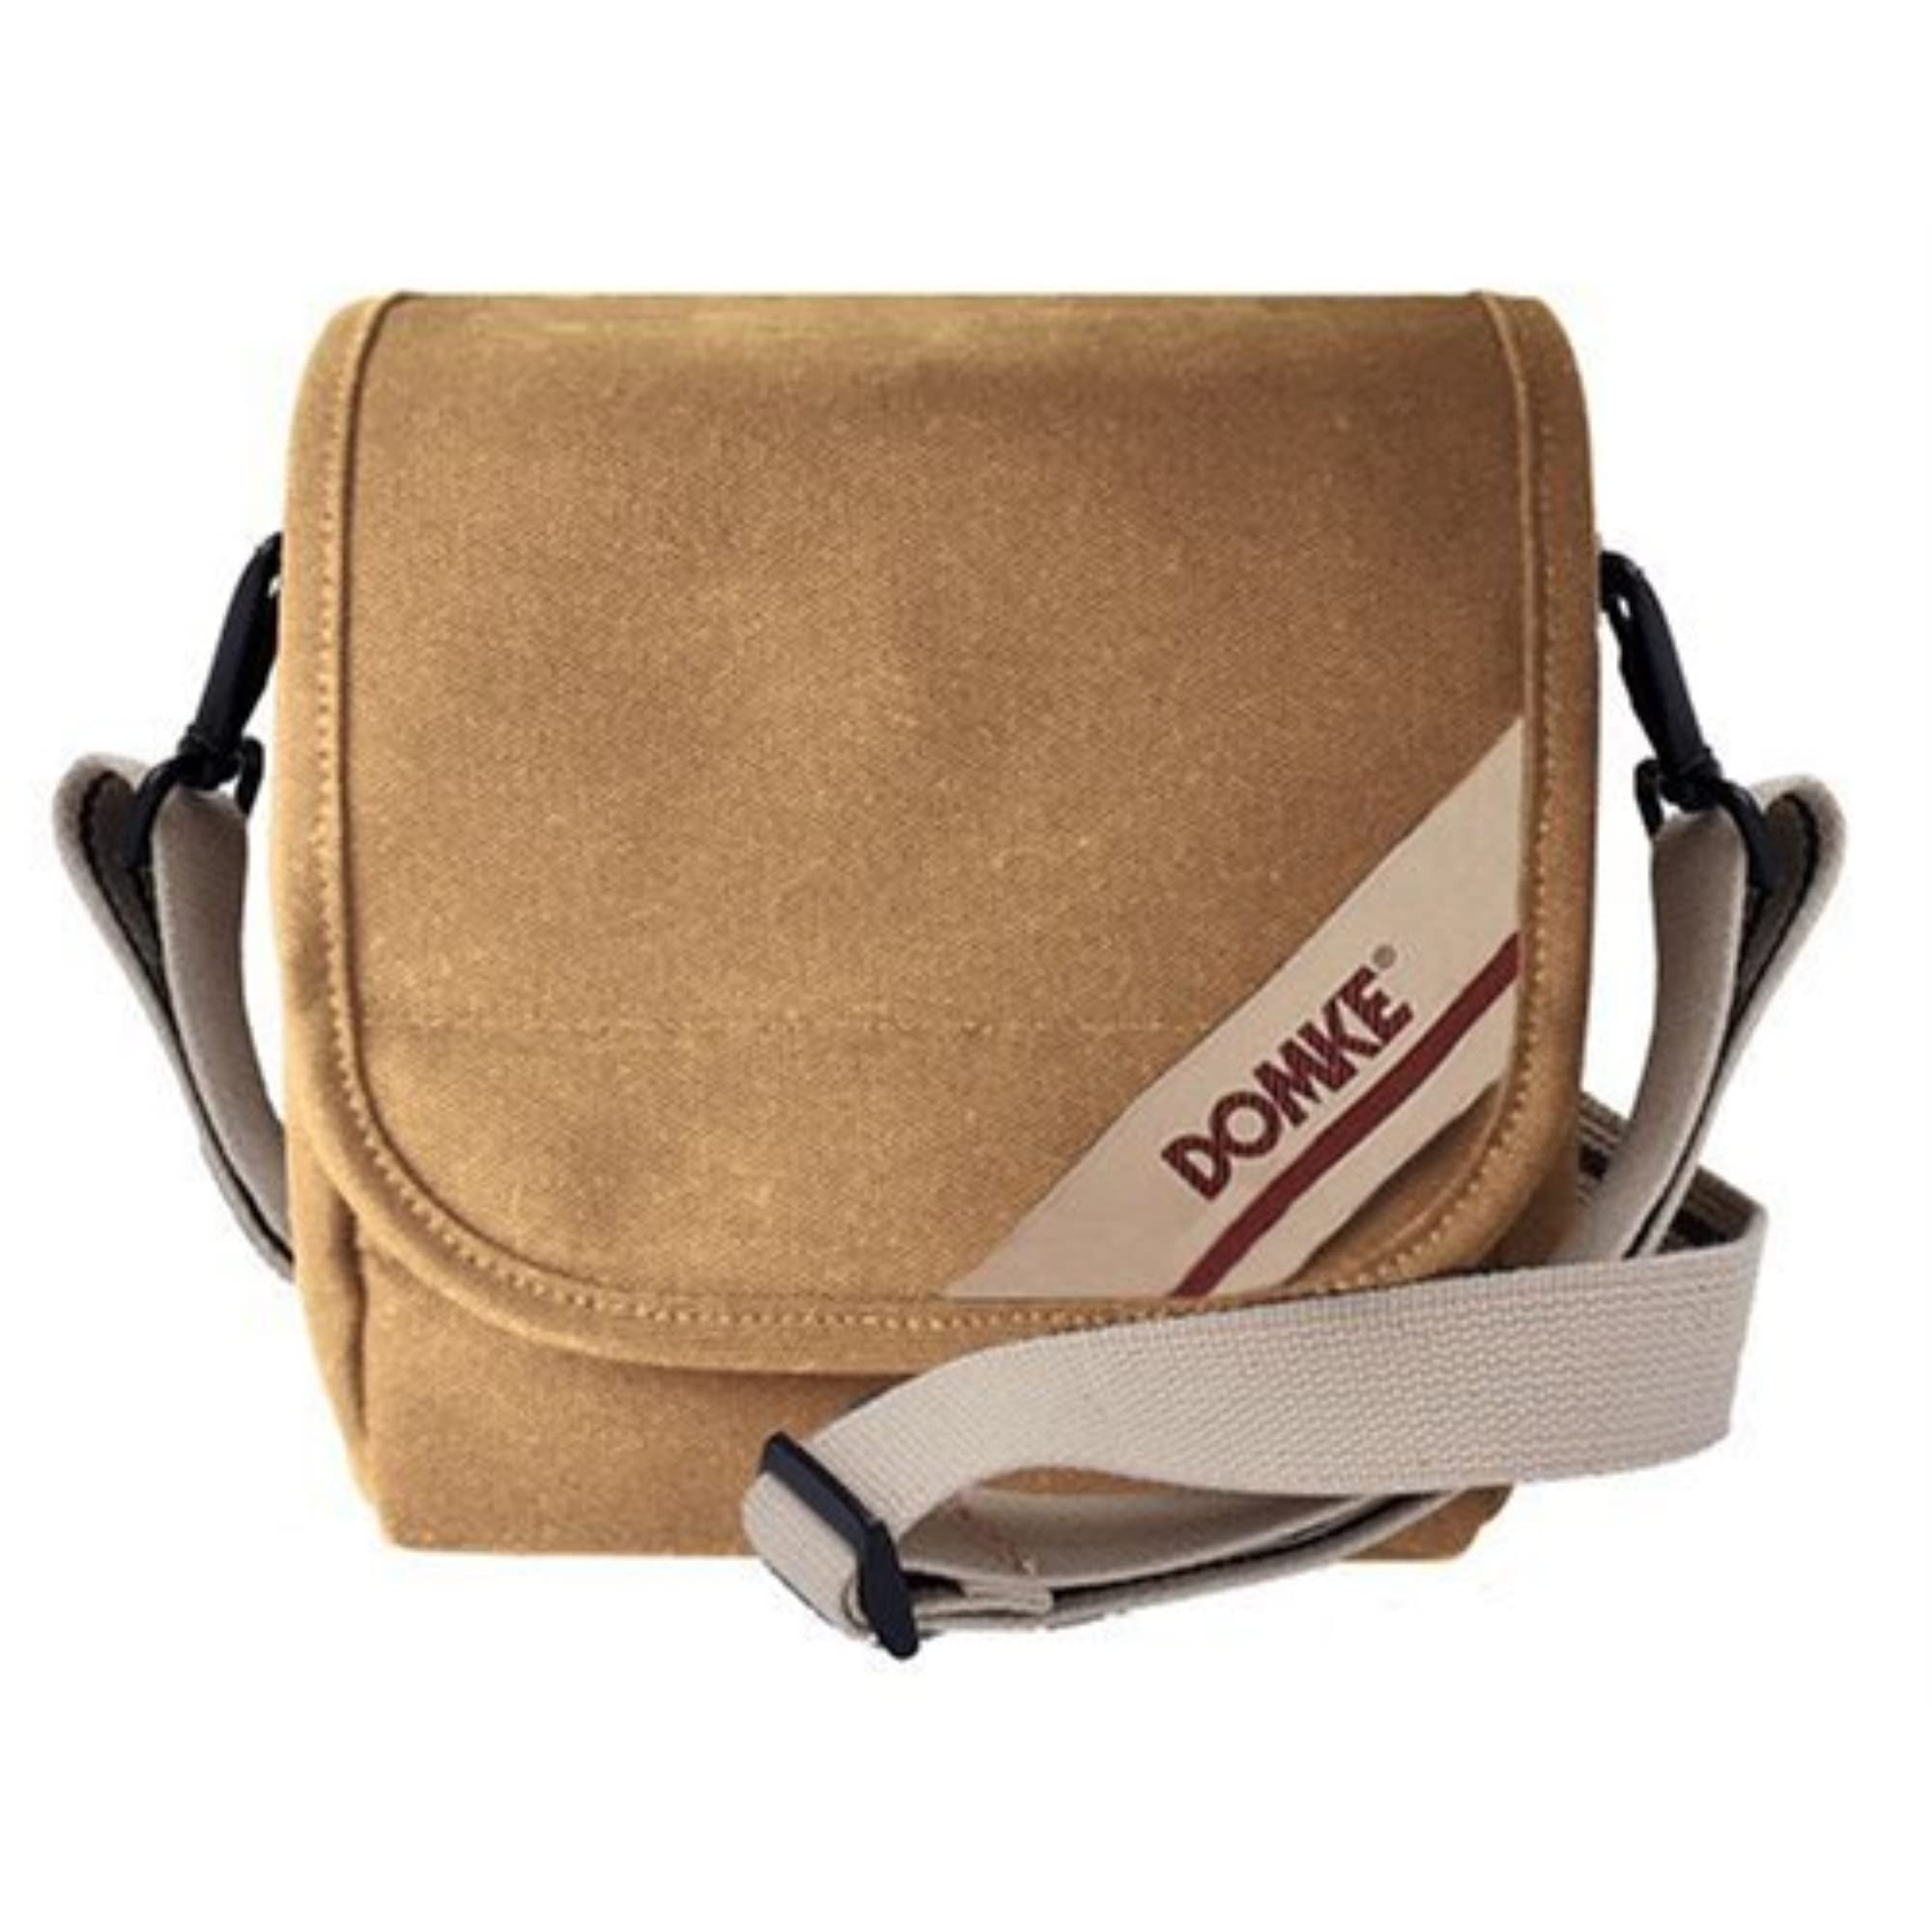 DOMKE Classic Camera Bags F-5XA Small Schoulder and Belt Bag Sand Kameratasche Sand/beige